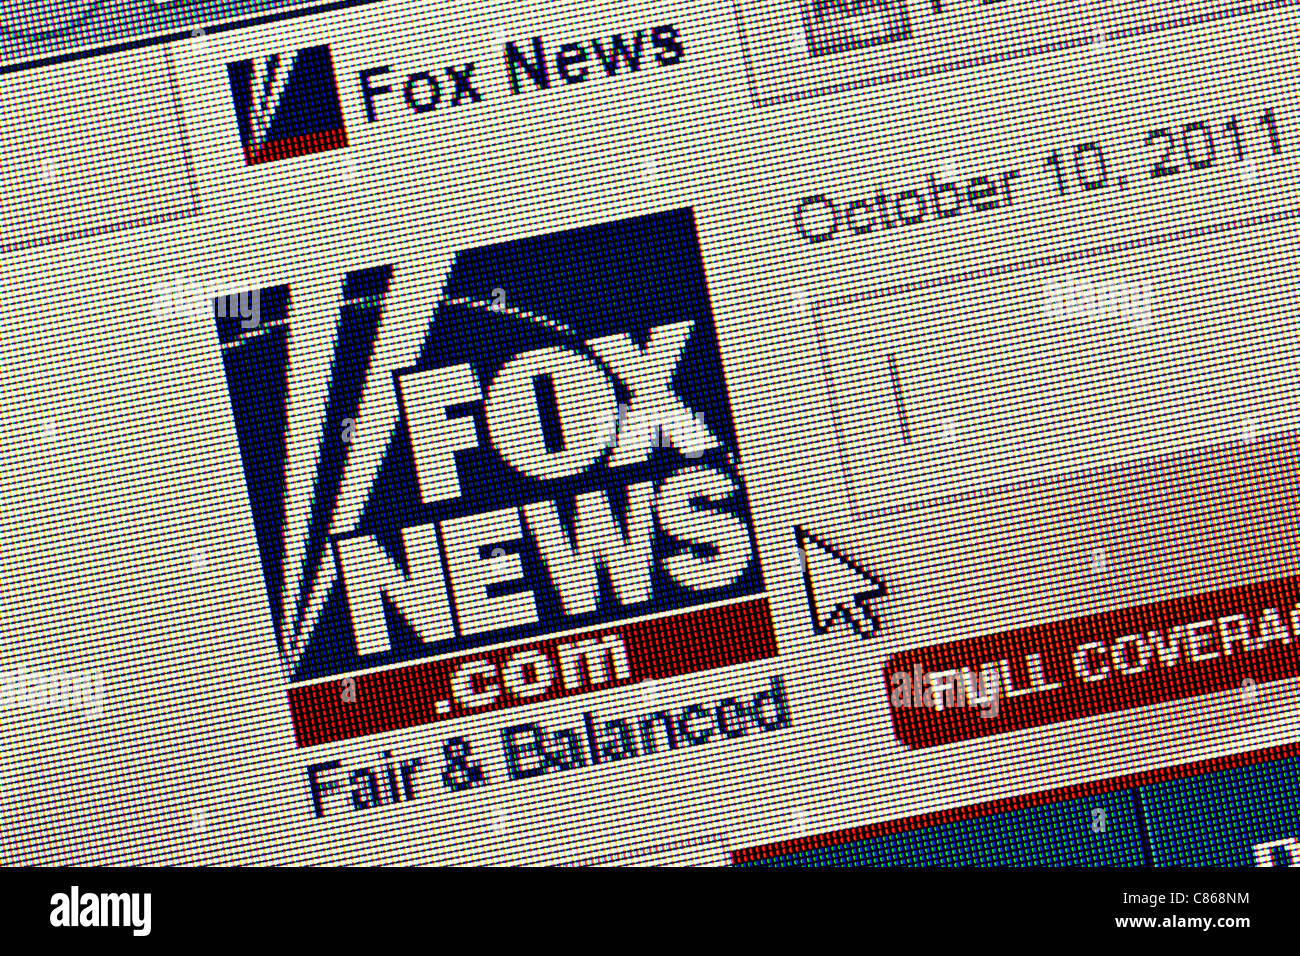 Fox News logo and website close up Stock Photo